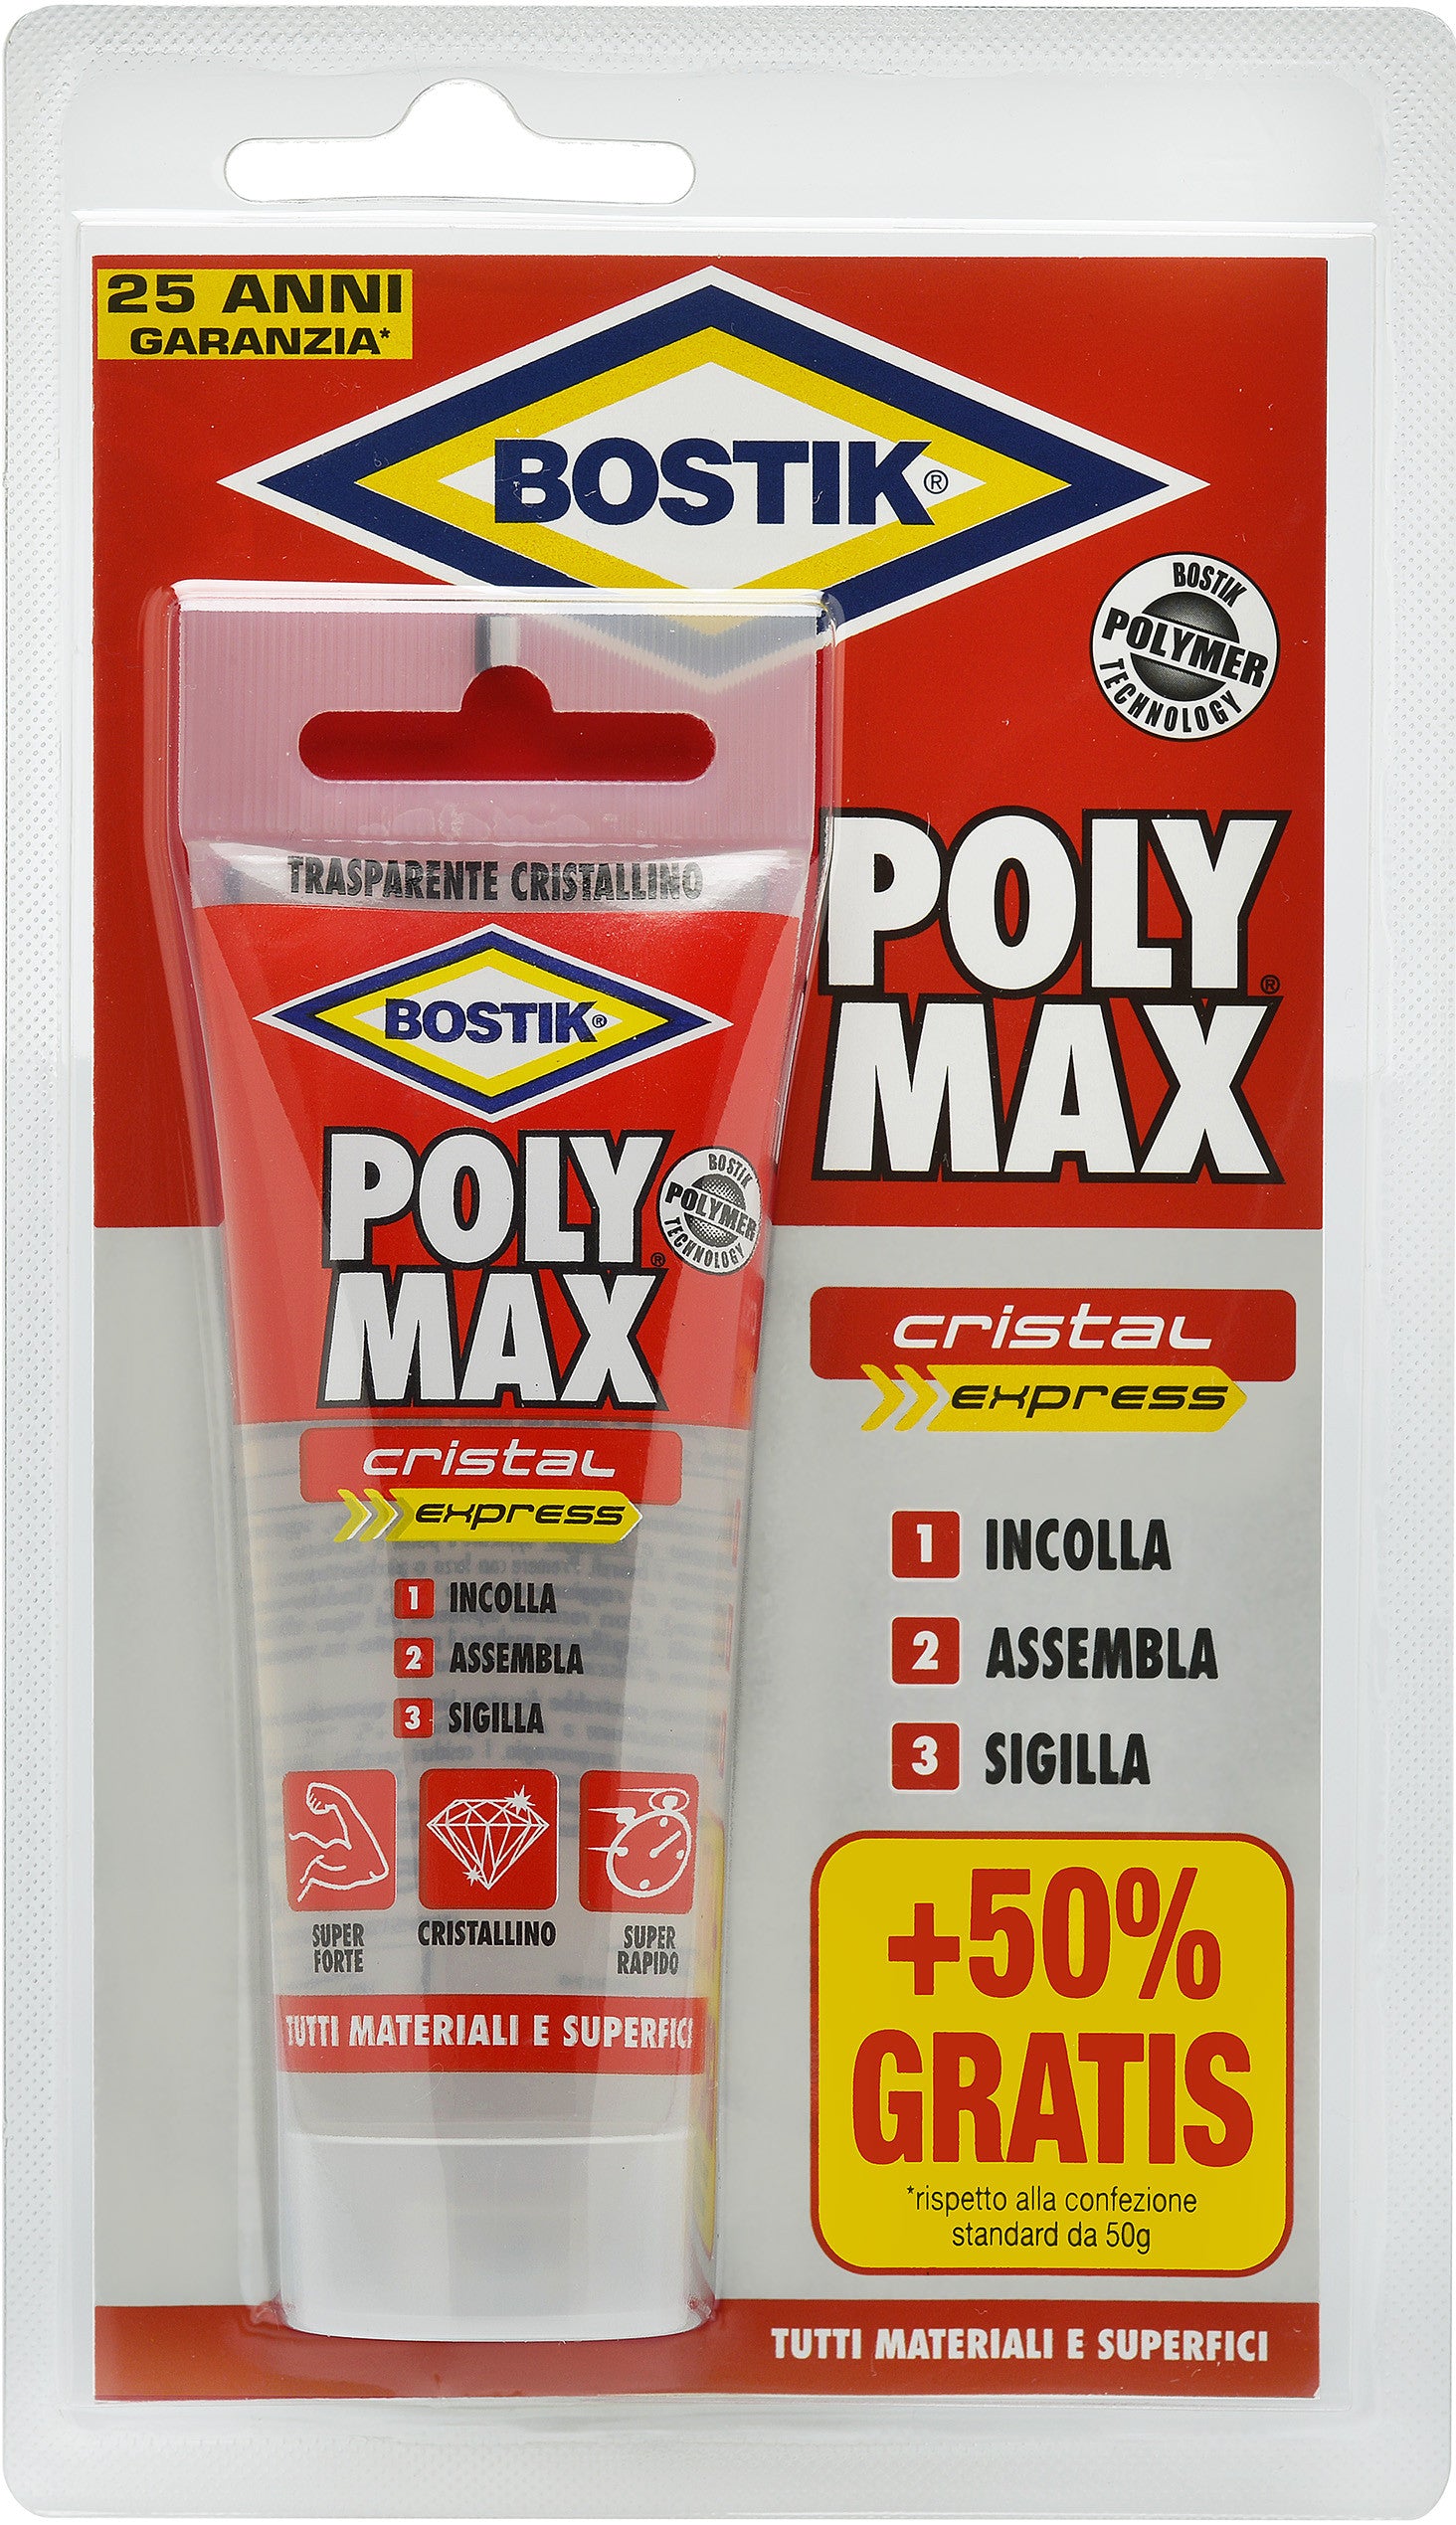 Bostik polymax original cristal gr.75